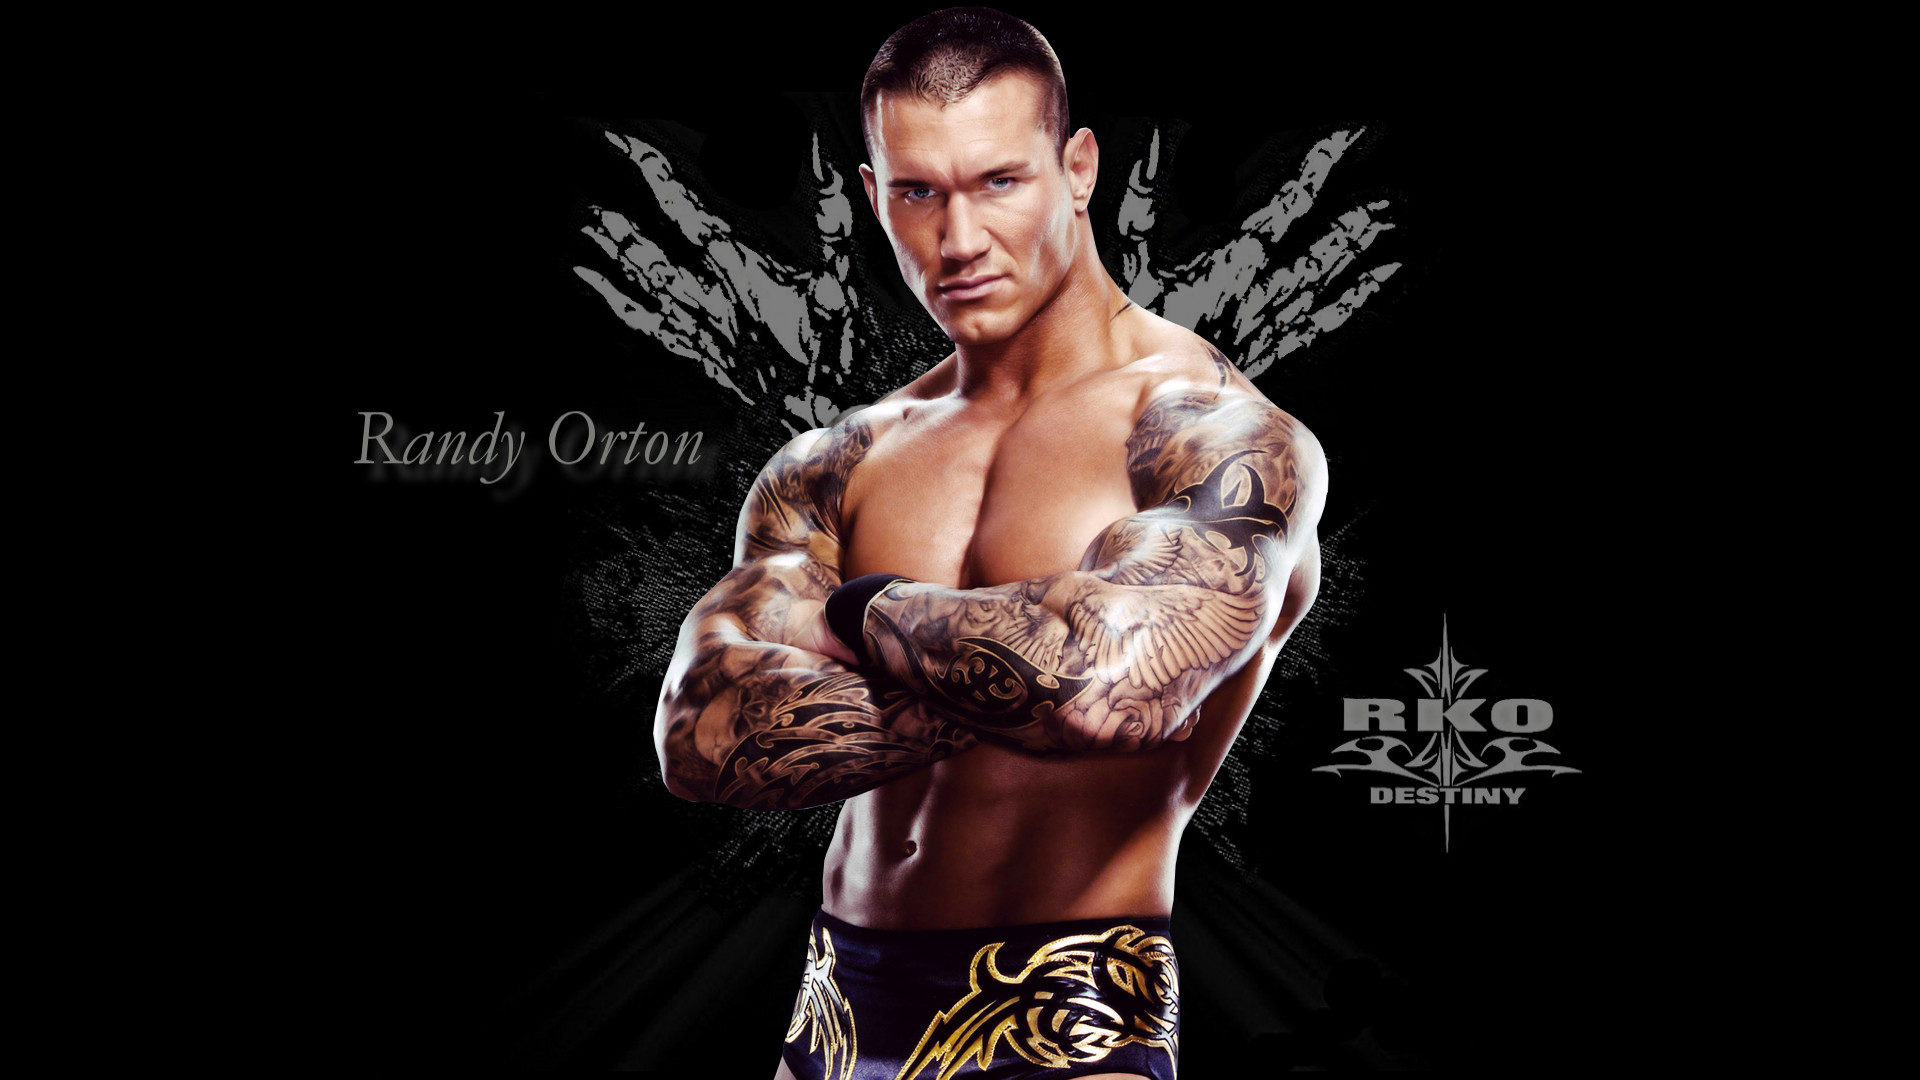 Wallpaper Movies Tv 2012 2015 Godlikes Wwe Randy Orton - Randy Orton Wallpaper Hd - HD Wallpaper 